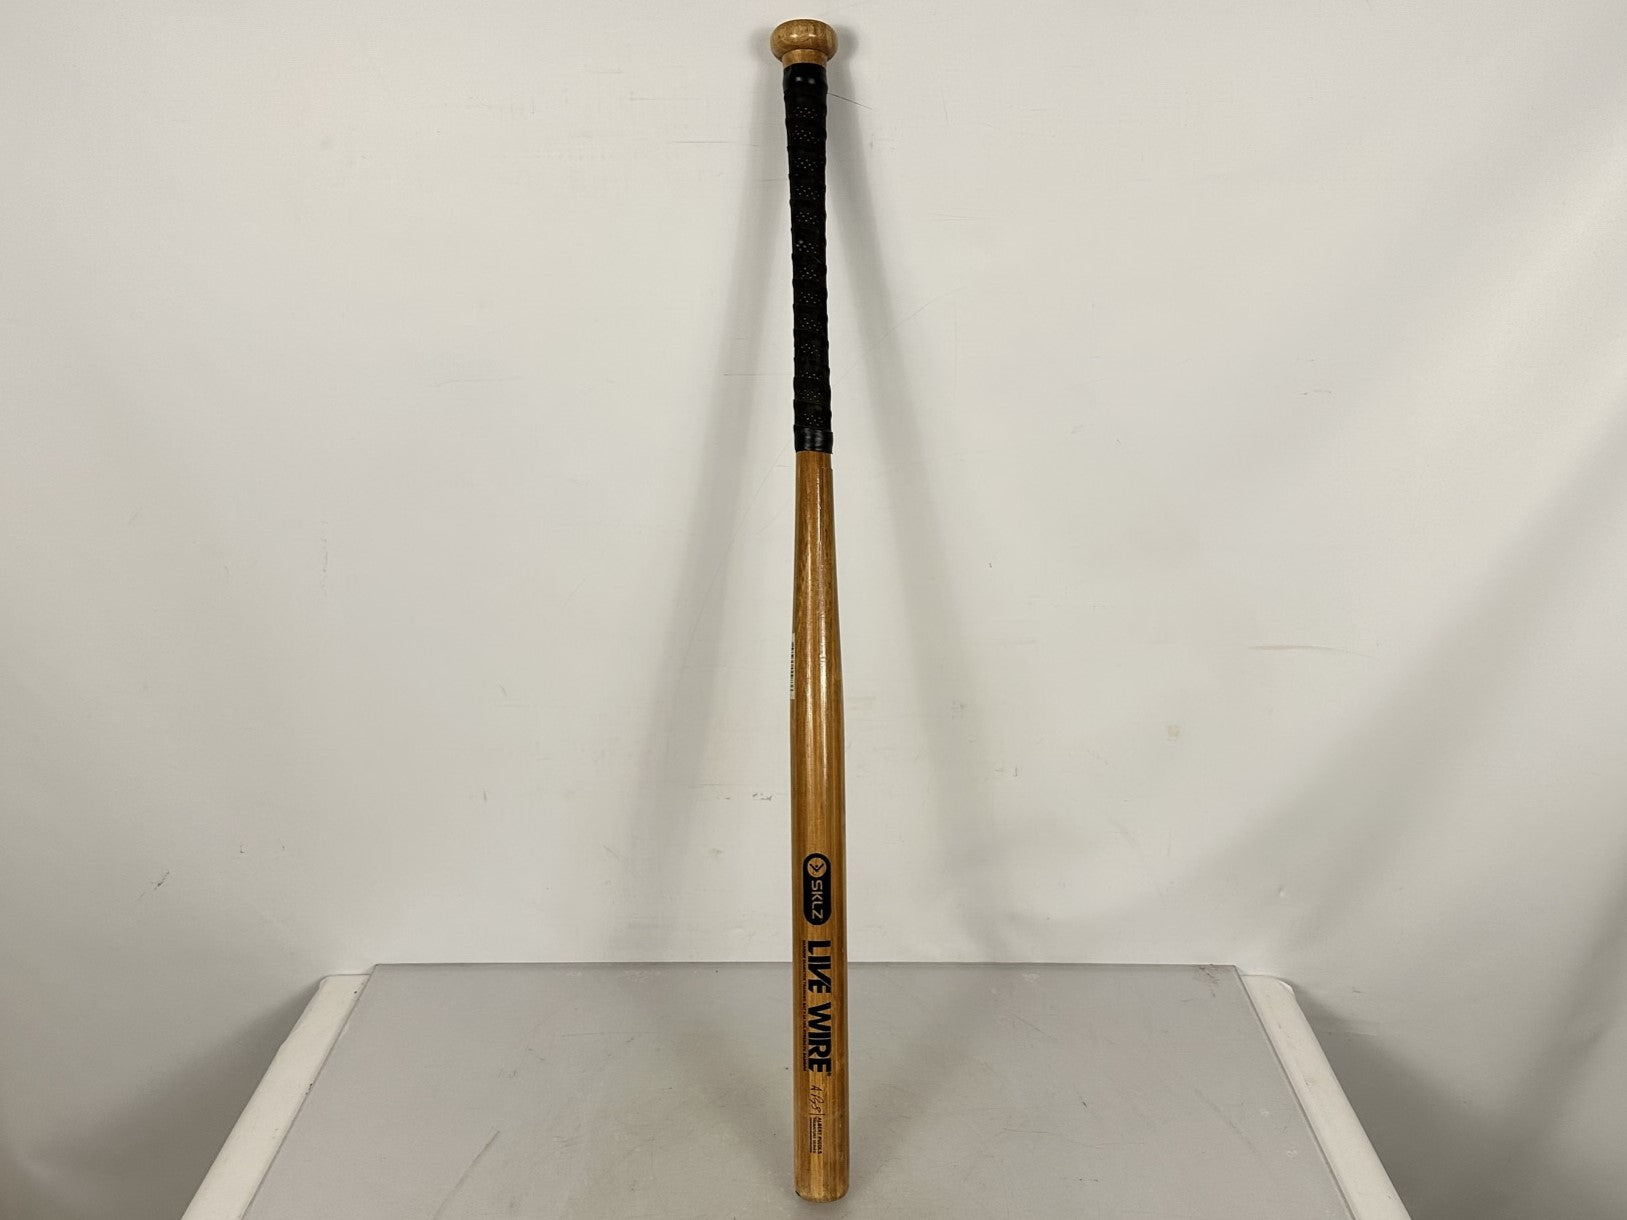 Bamboo Batting - Full Size – Threaded Lines